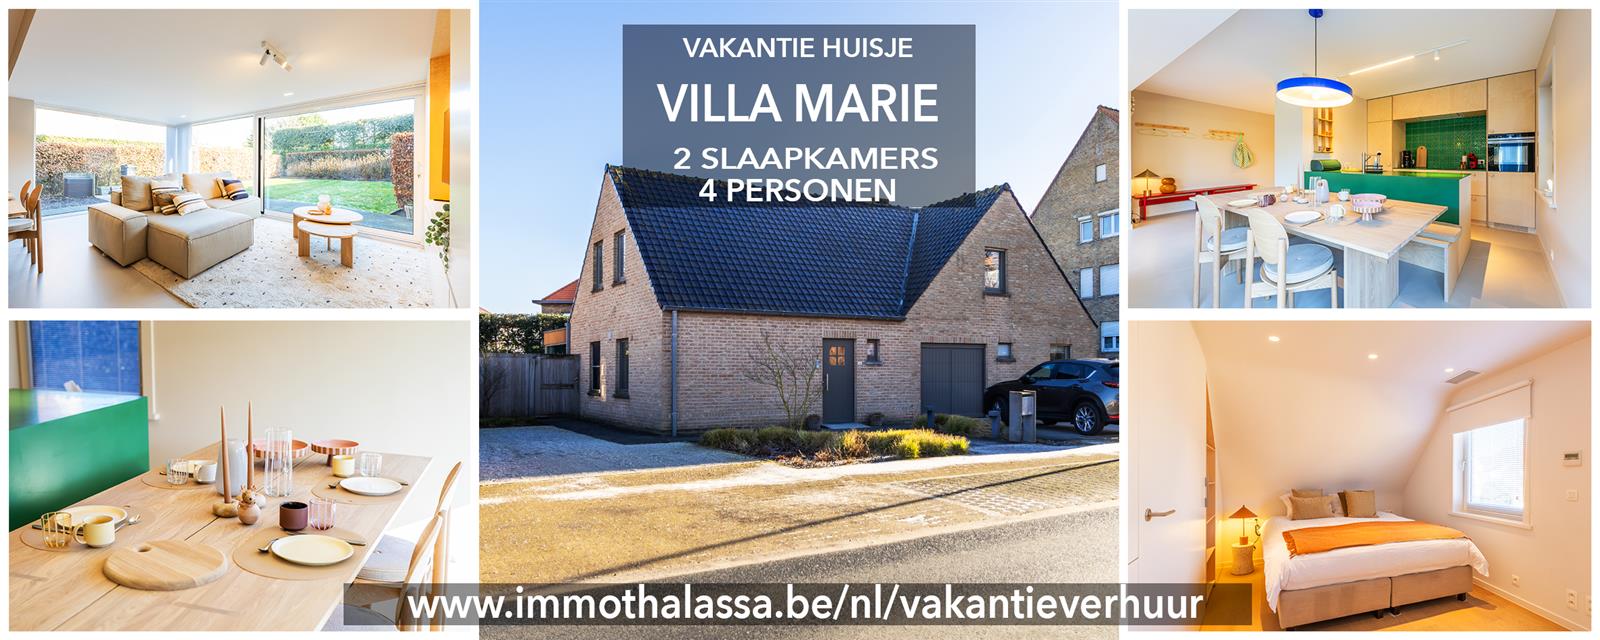 Marie/villa